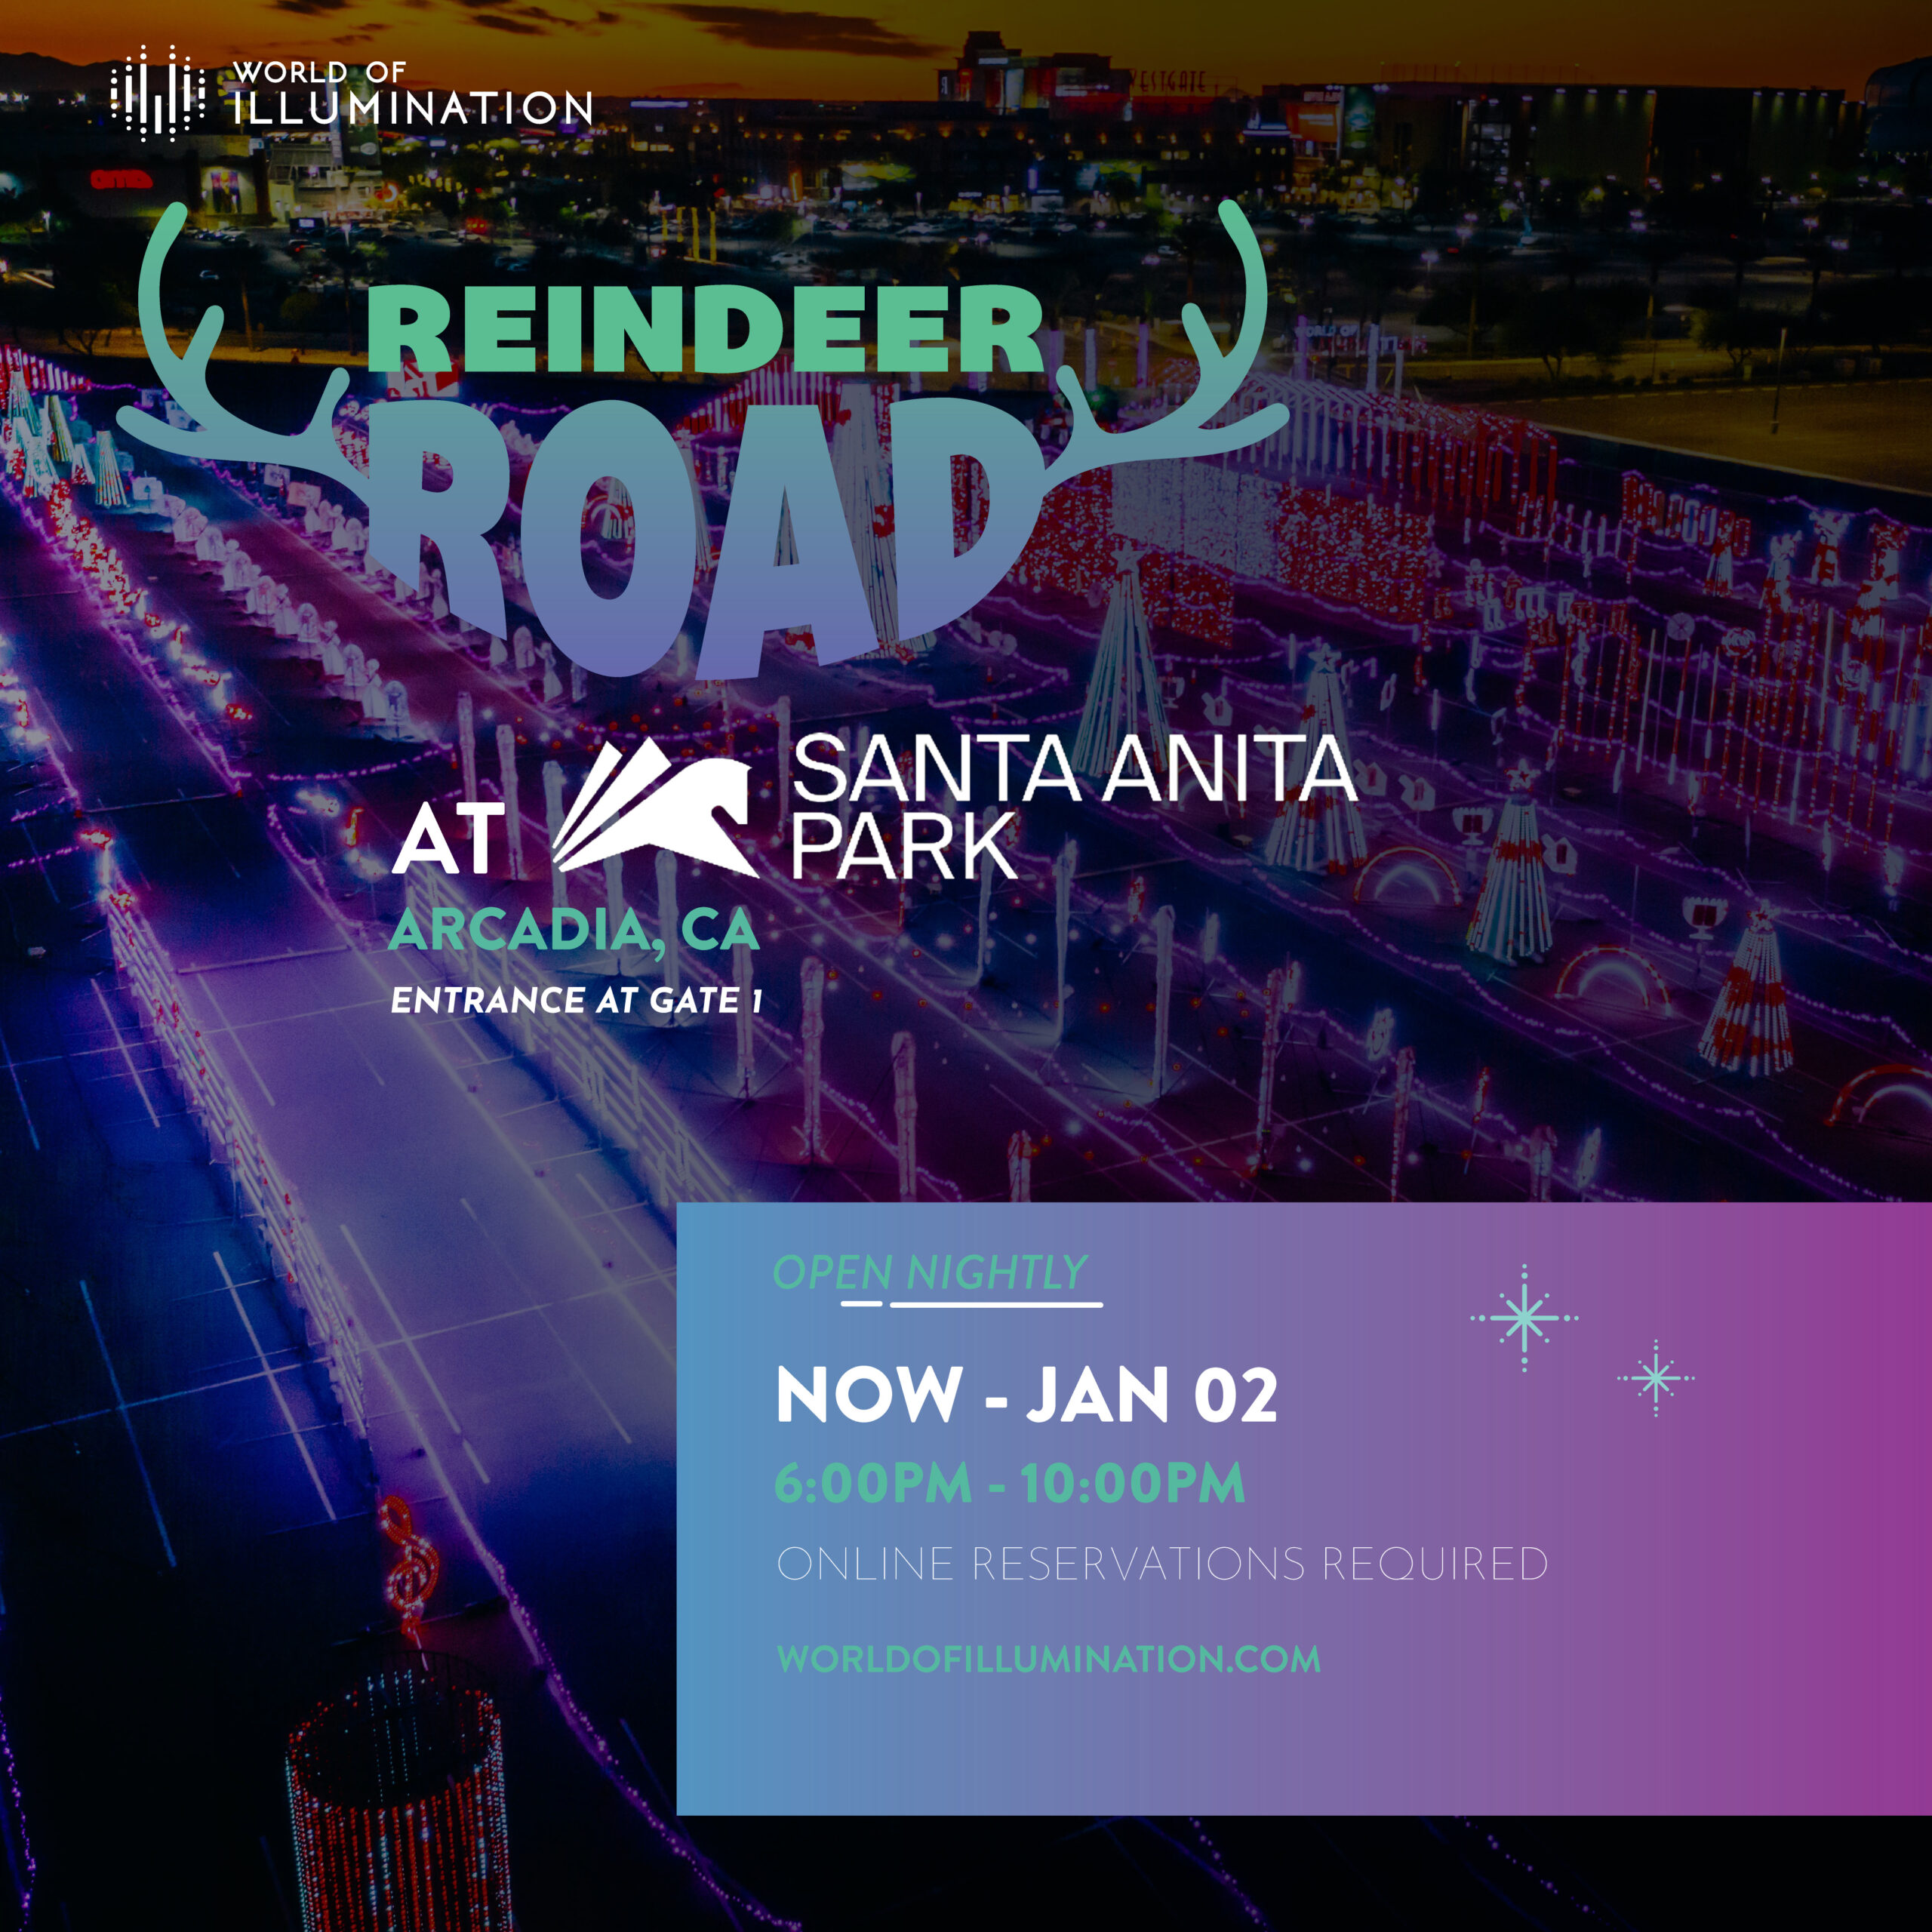 Reindeer Road at Santa Anita Park through January 2nd